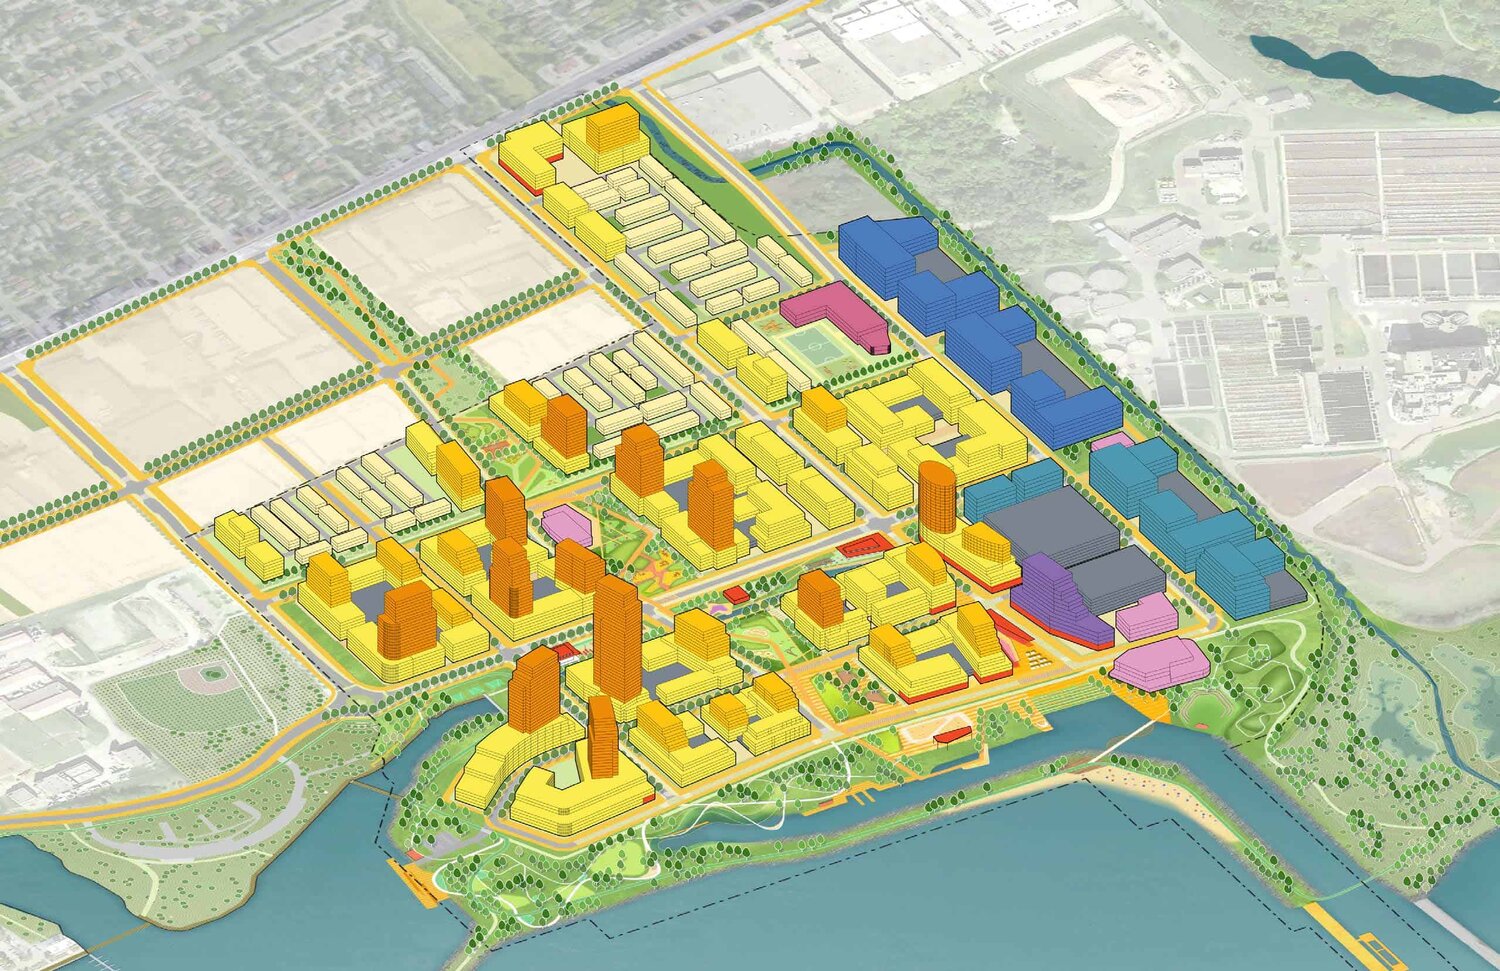 Sasaki’s Lakeview Village Development Master Plan